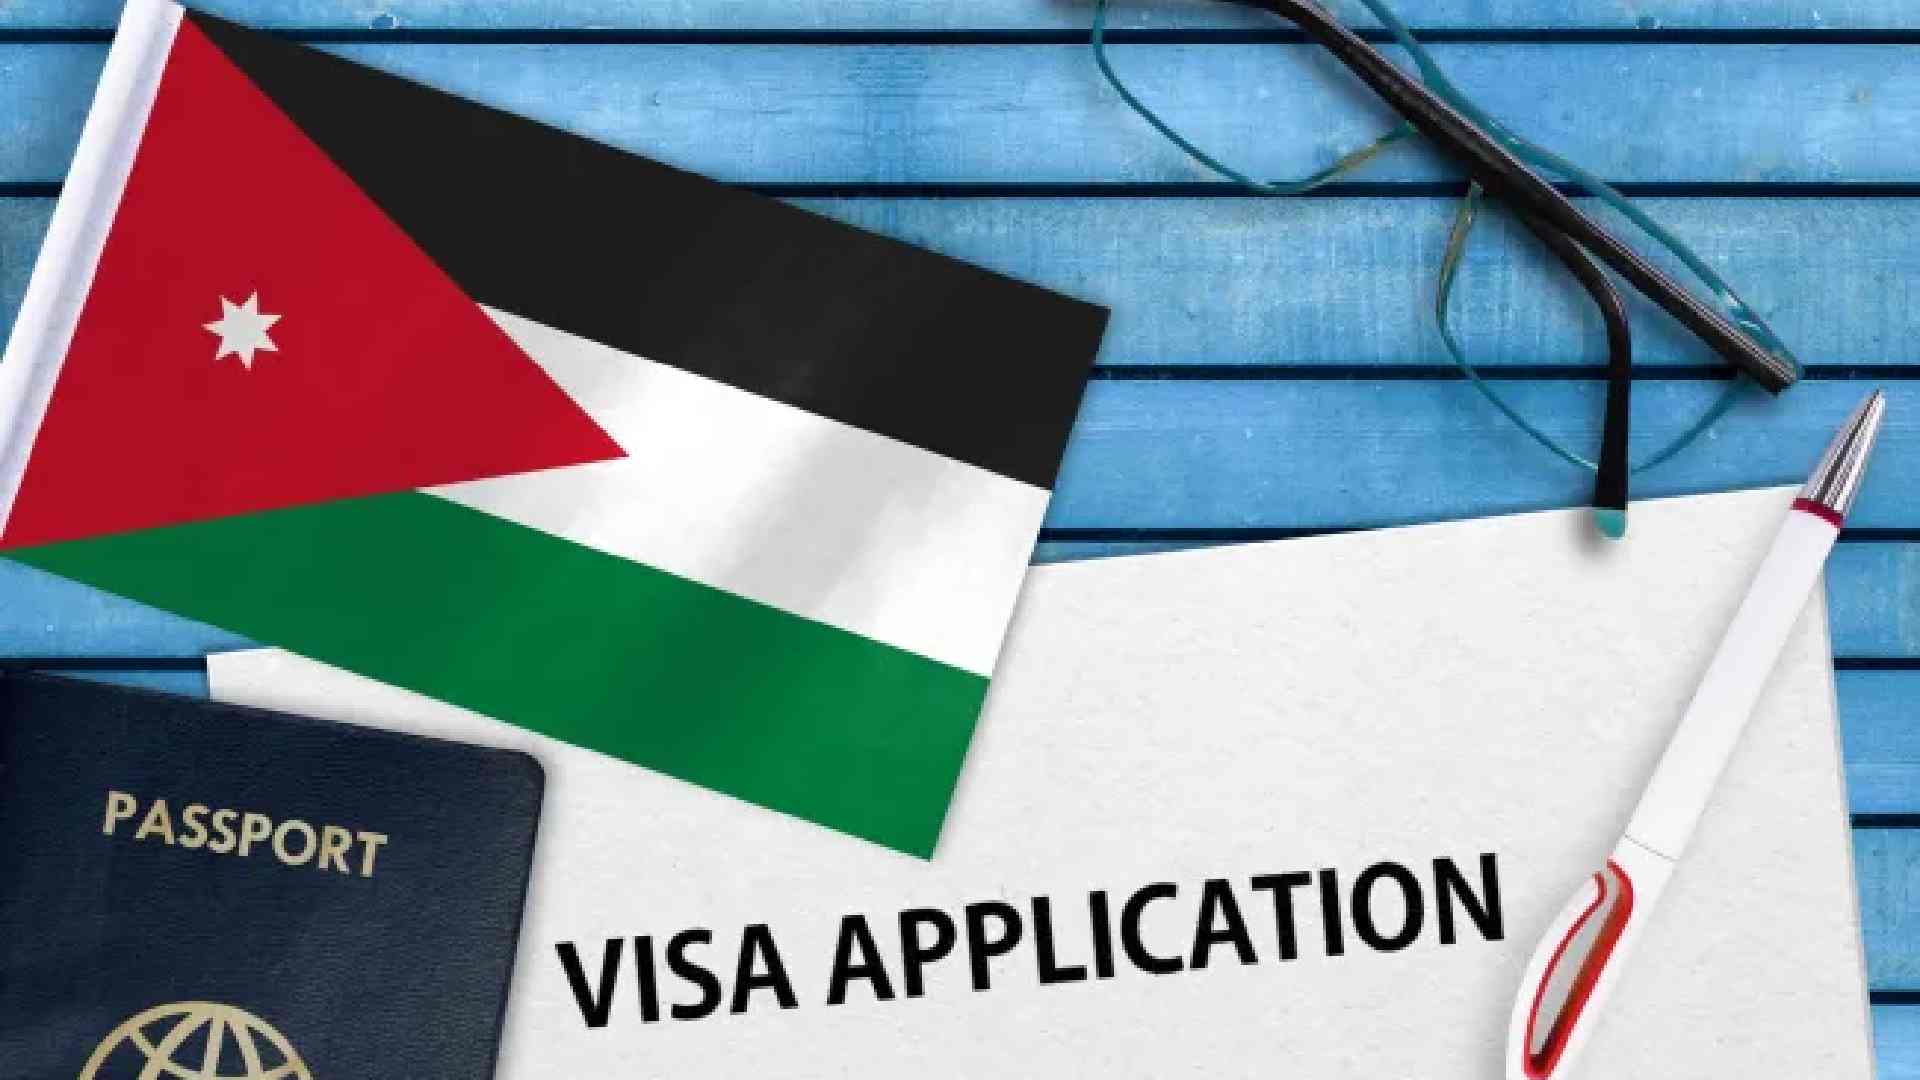 Jordan visa on arrival 